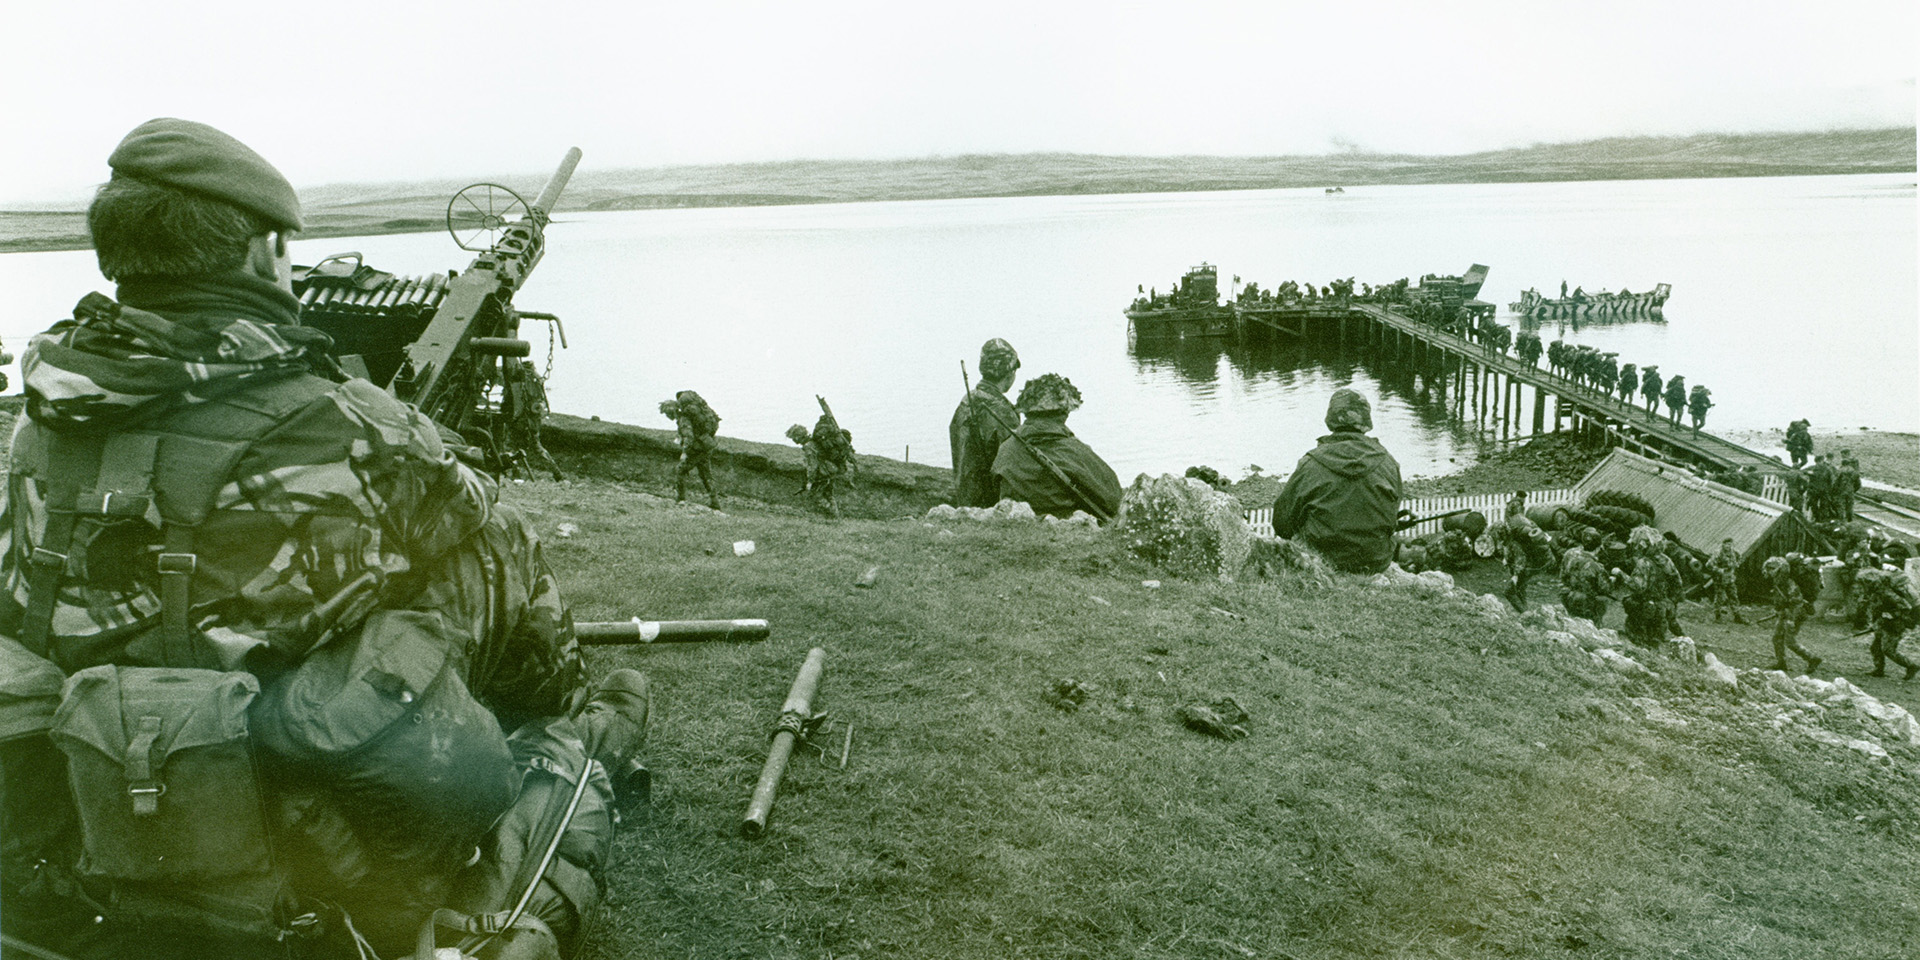 Providing gun cover for troops coming ashore, San Carlos, 1982